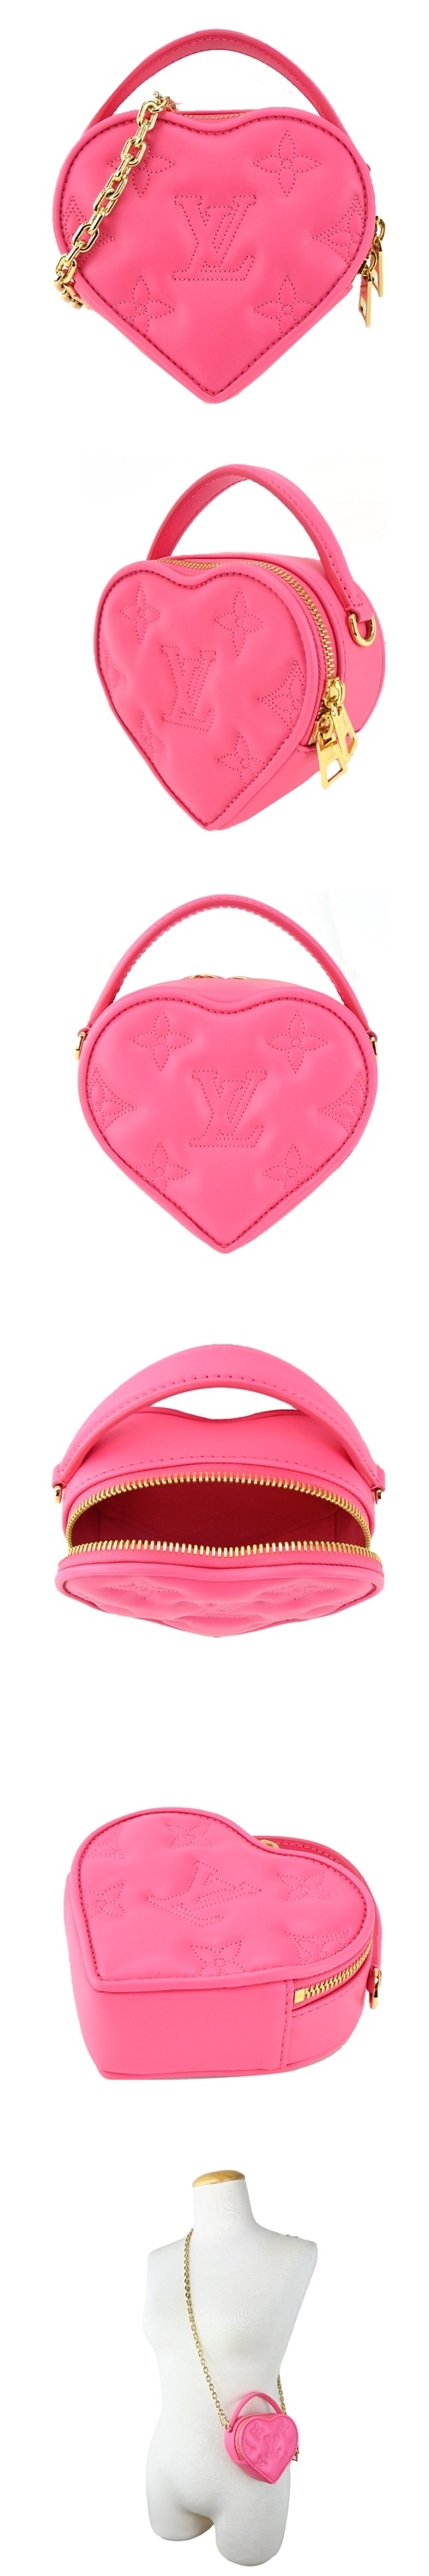 Louis Vuitton Pop My Heart 絎縫小牛皮鏈帶手提/斜背包(粉色)